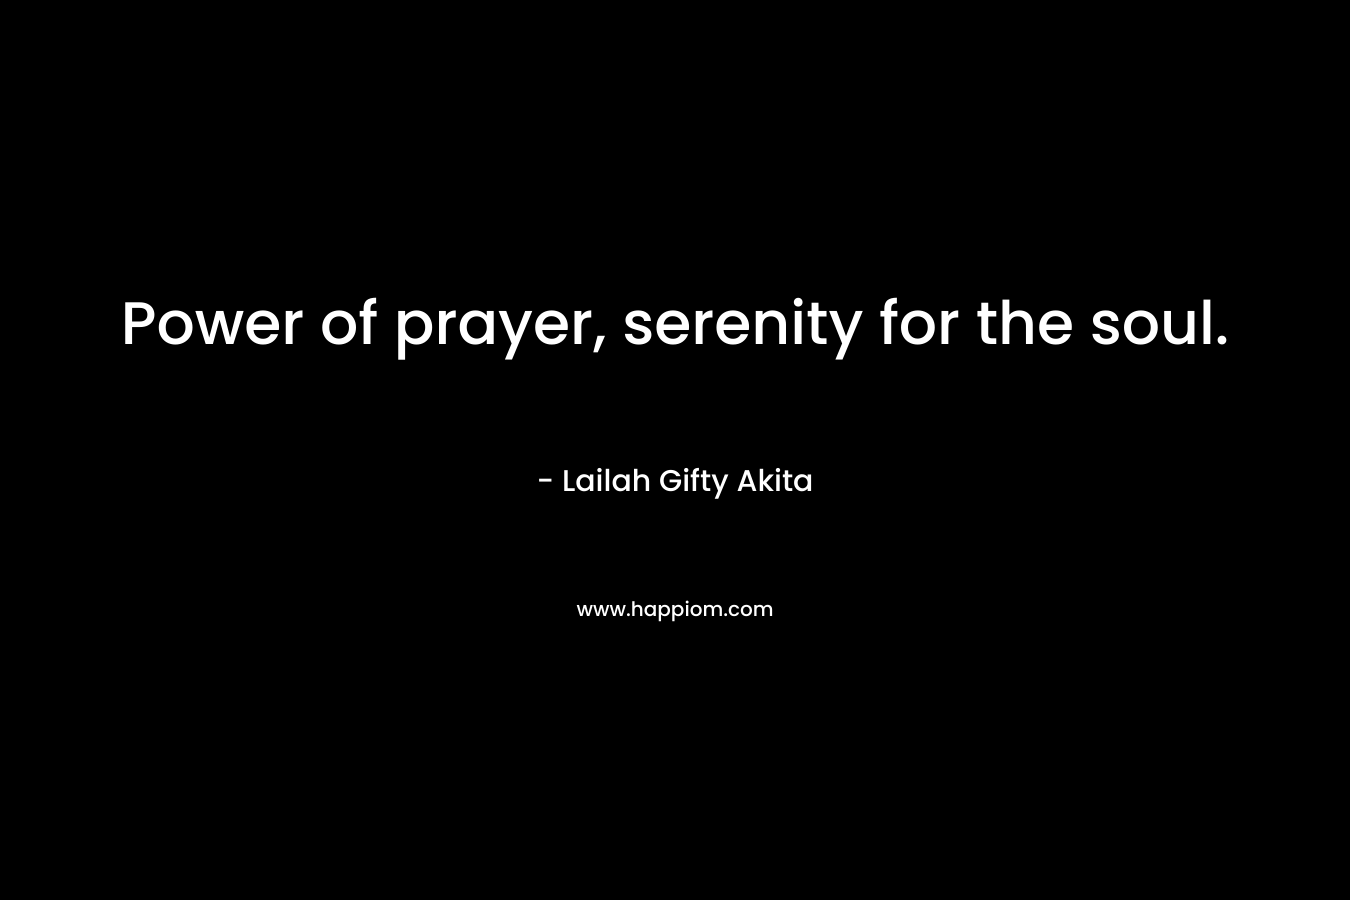 Power of prayer, serenity for the soul.